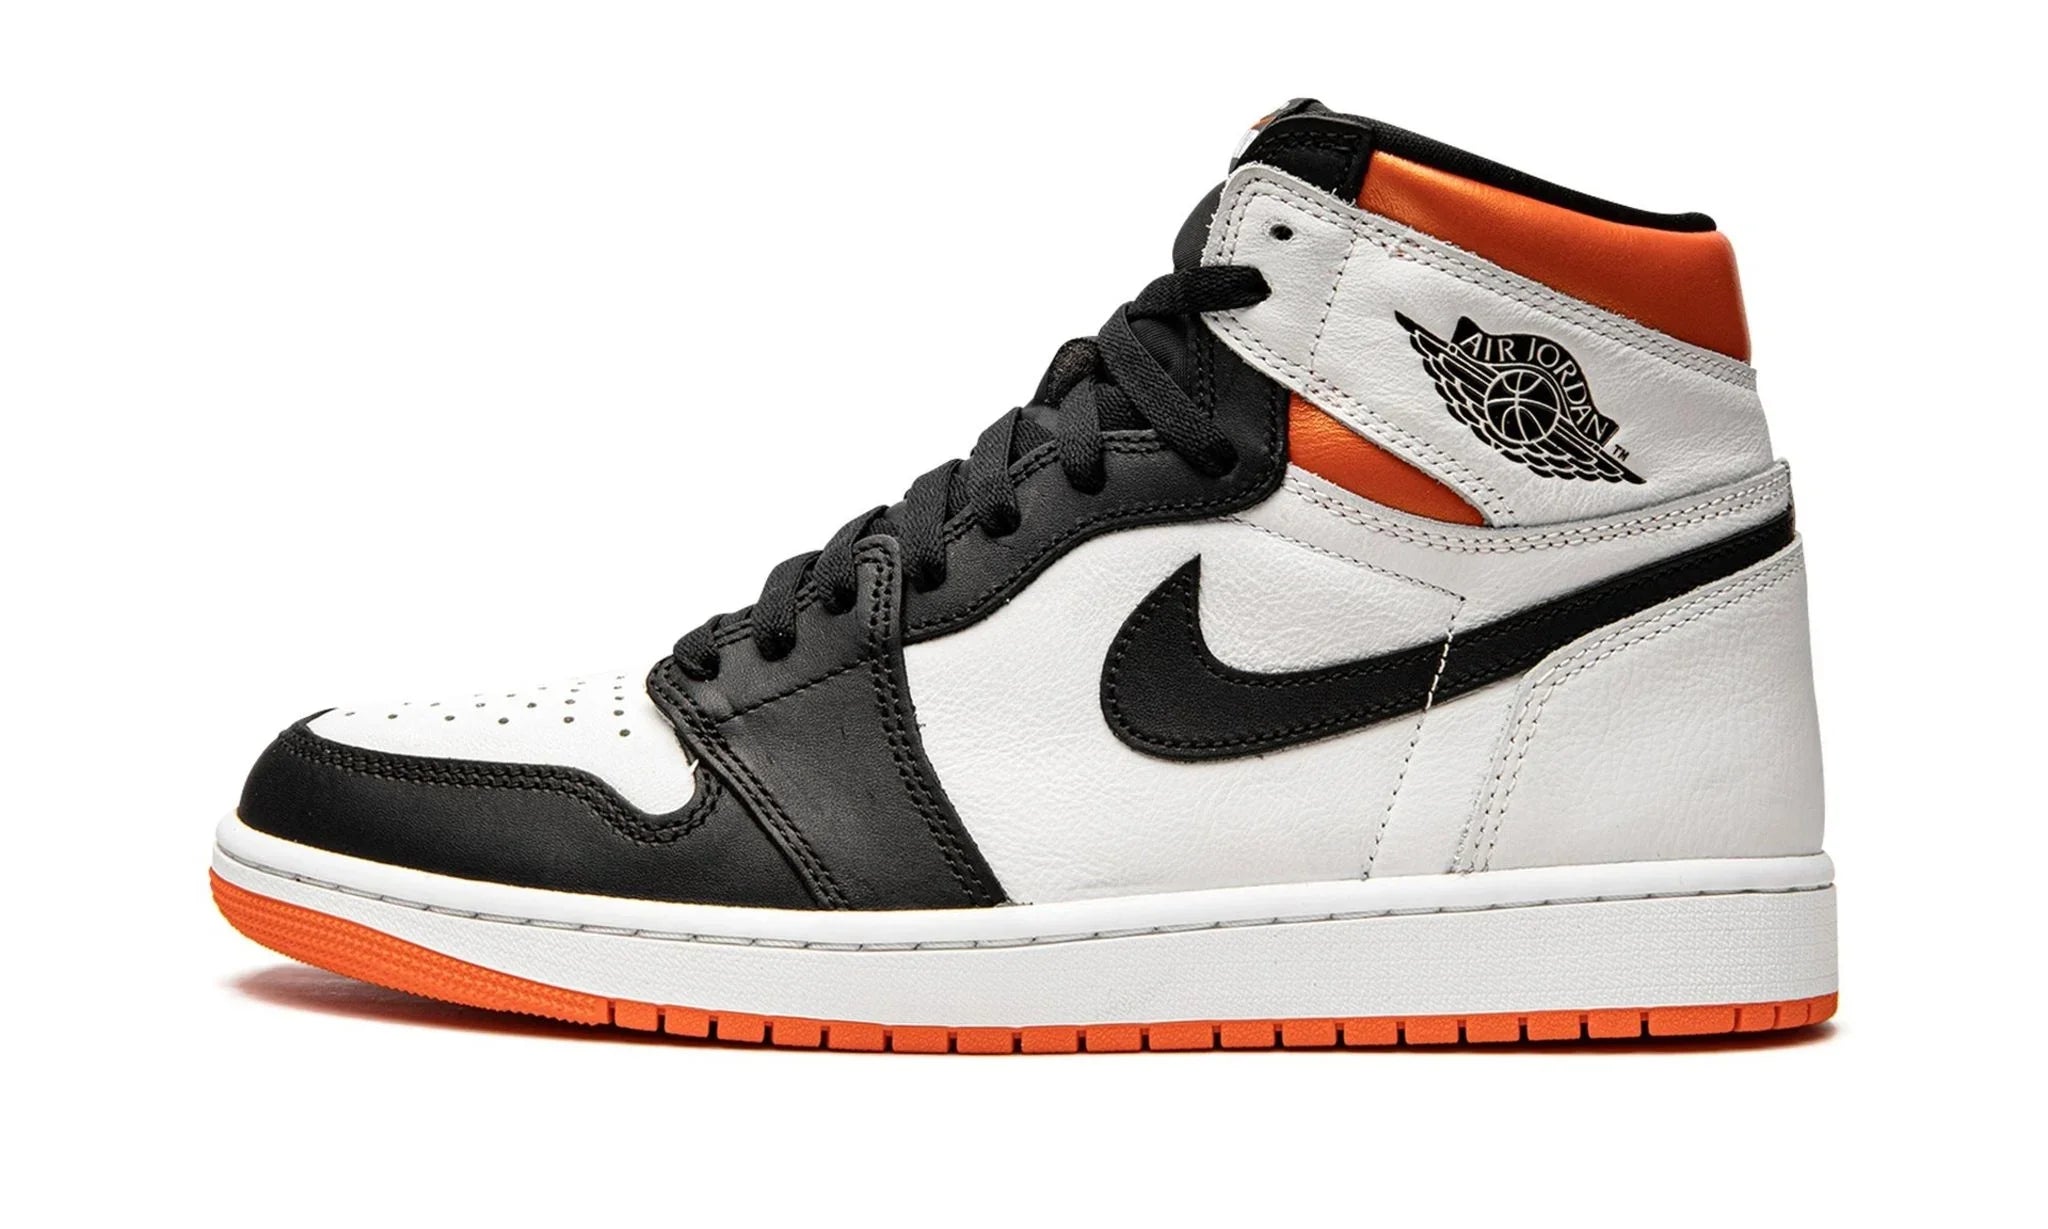 Jordan 1 Retro High "Electro Orange" - 554725-140 - Sneakers